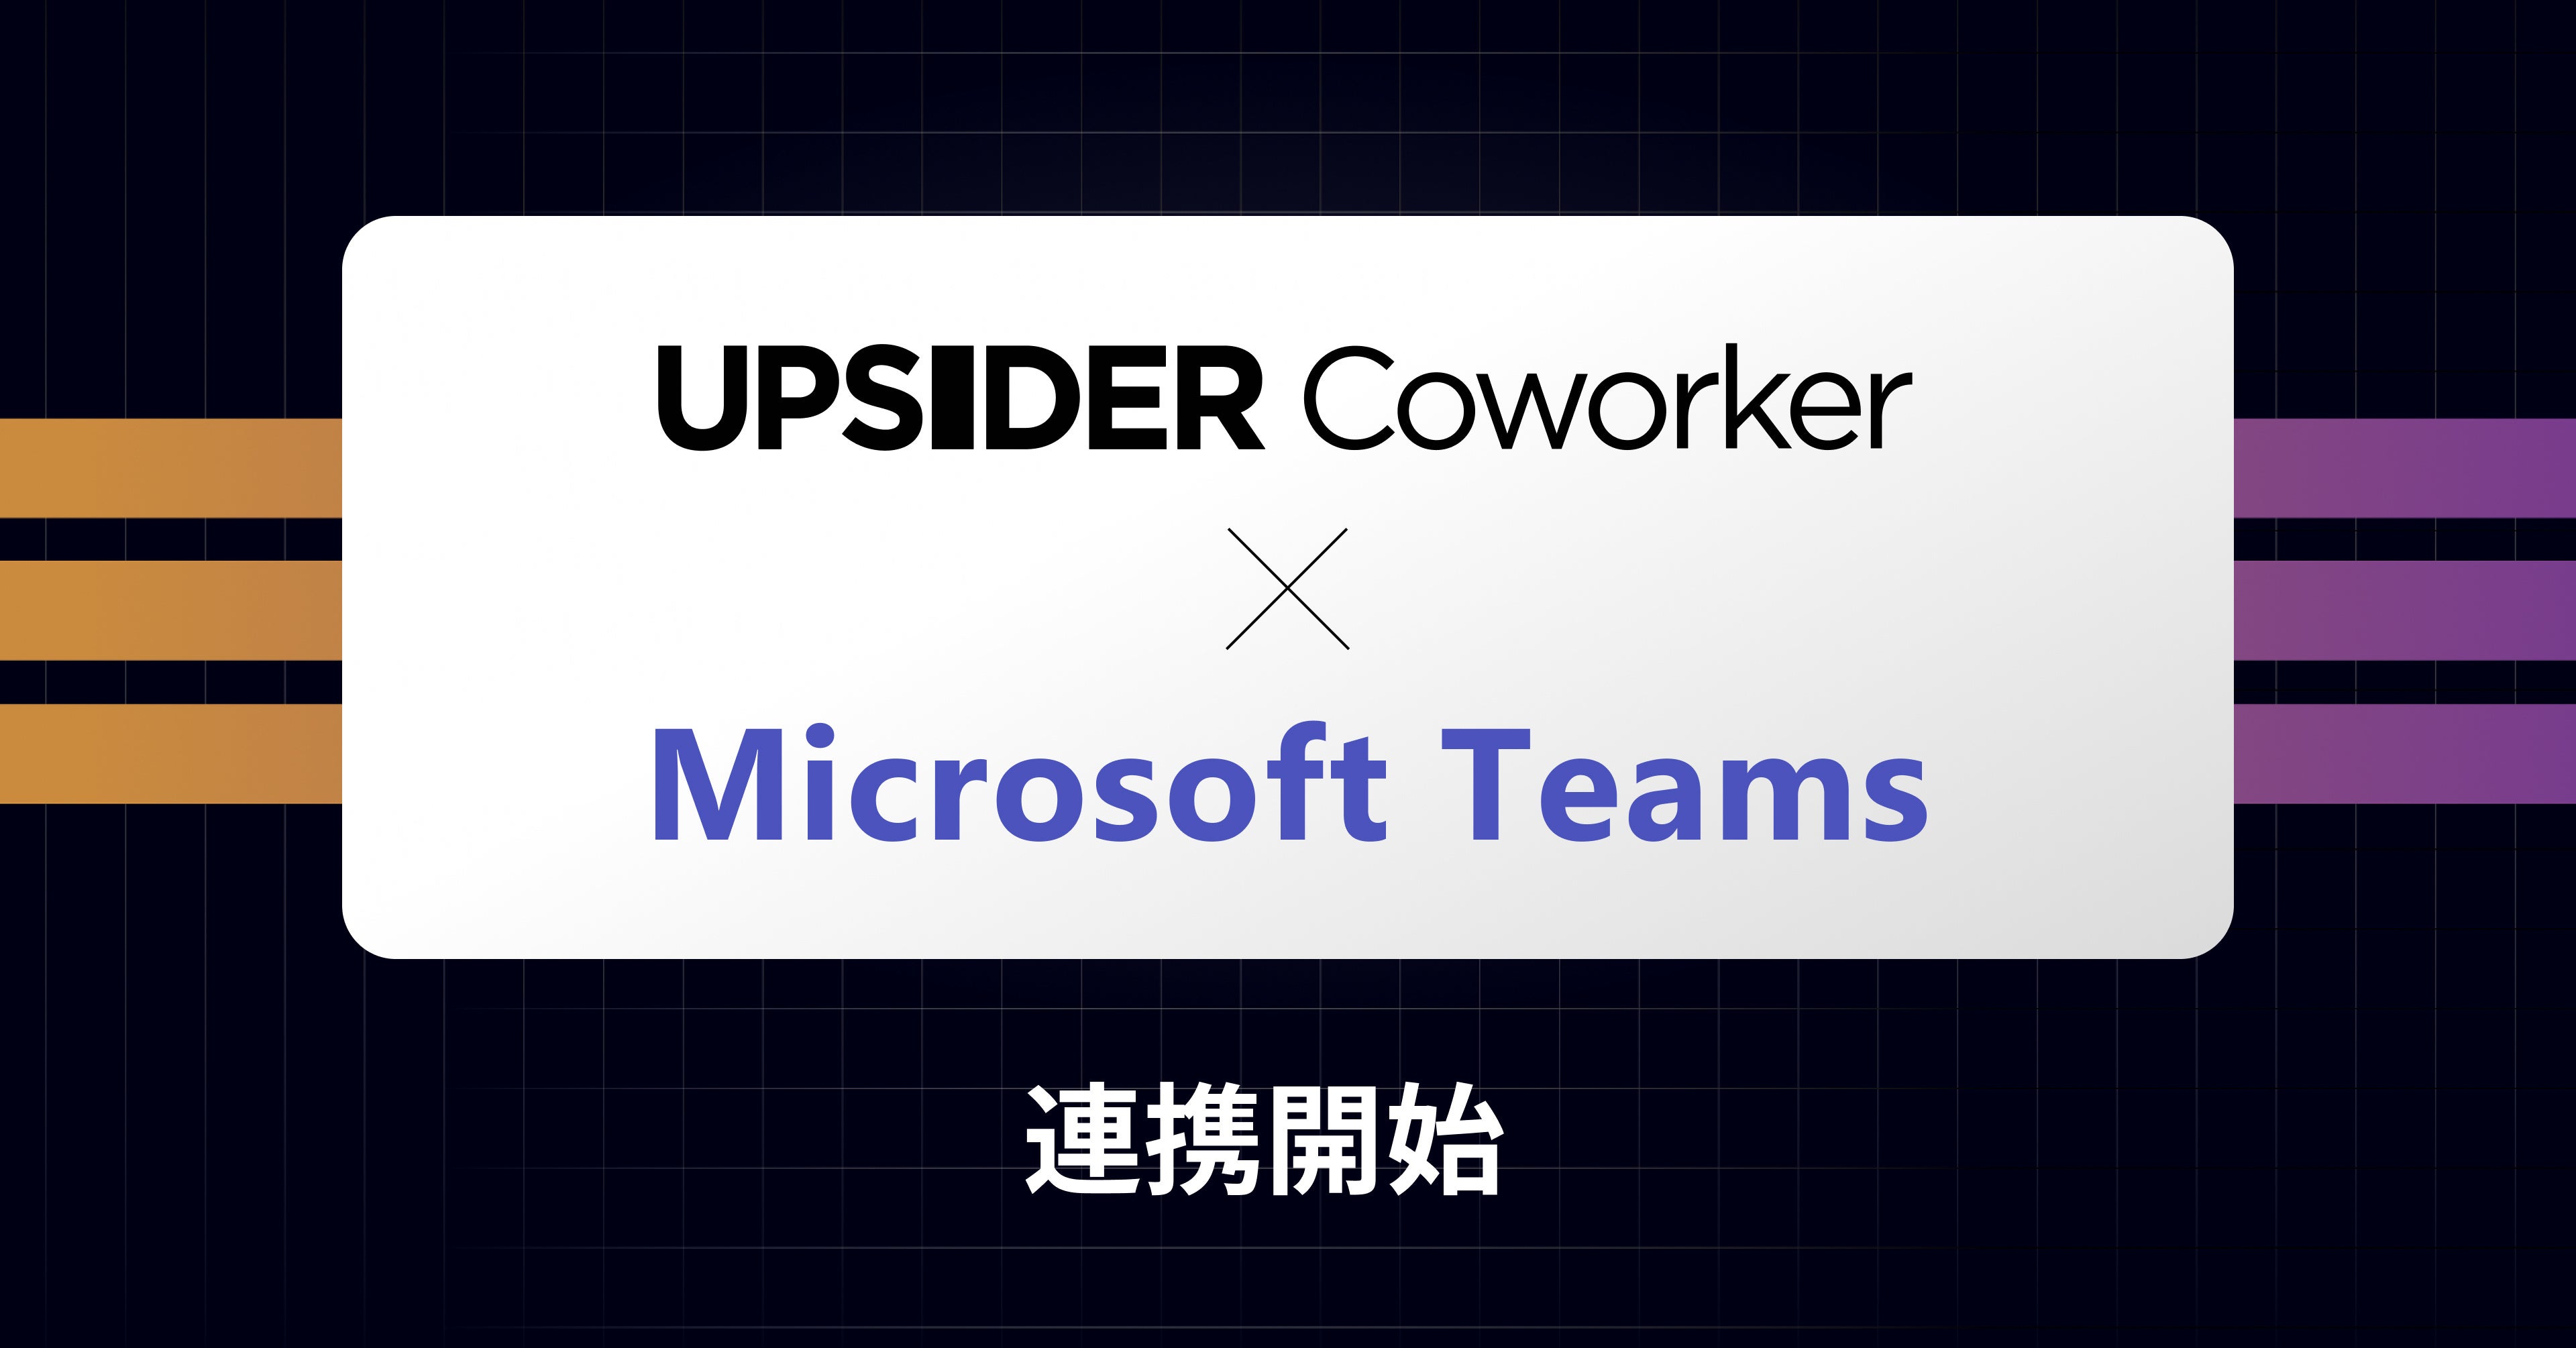 AIチャット型業務ツール「UPSIDER Coworker」、Microsoft Teams との連携に対応